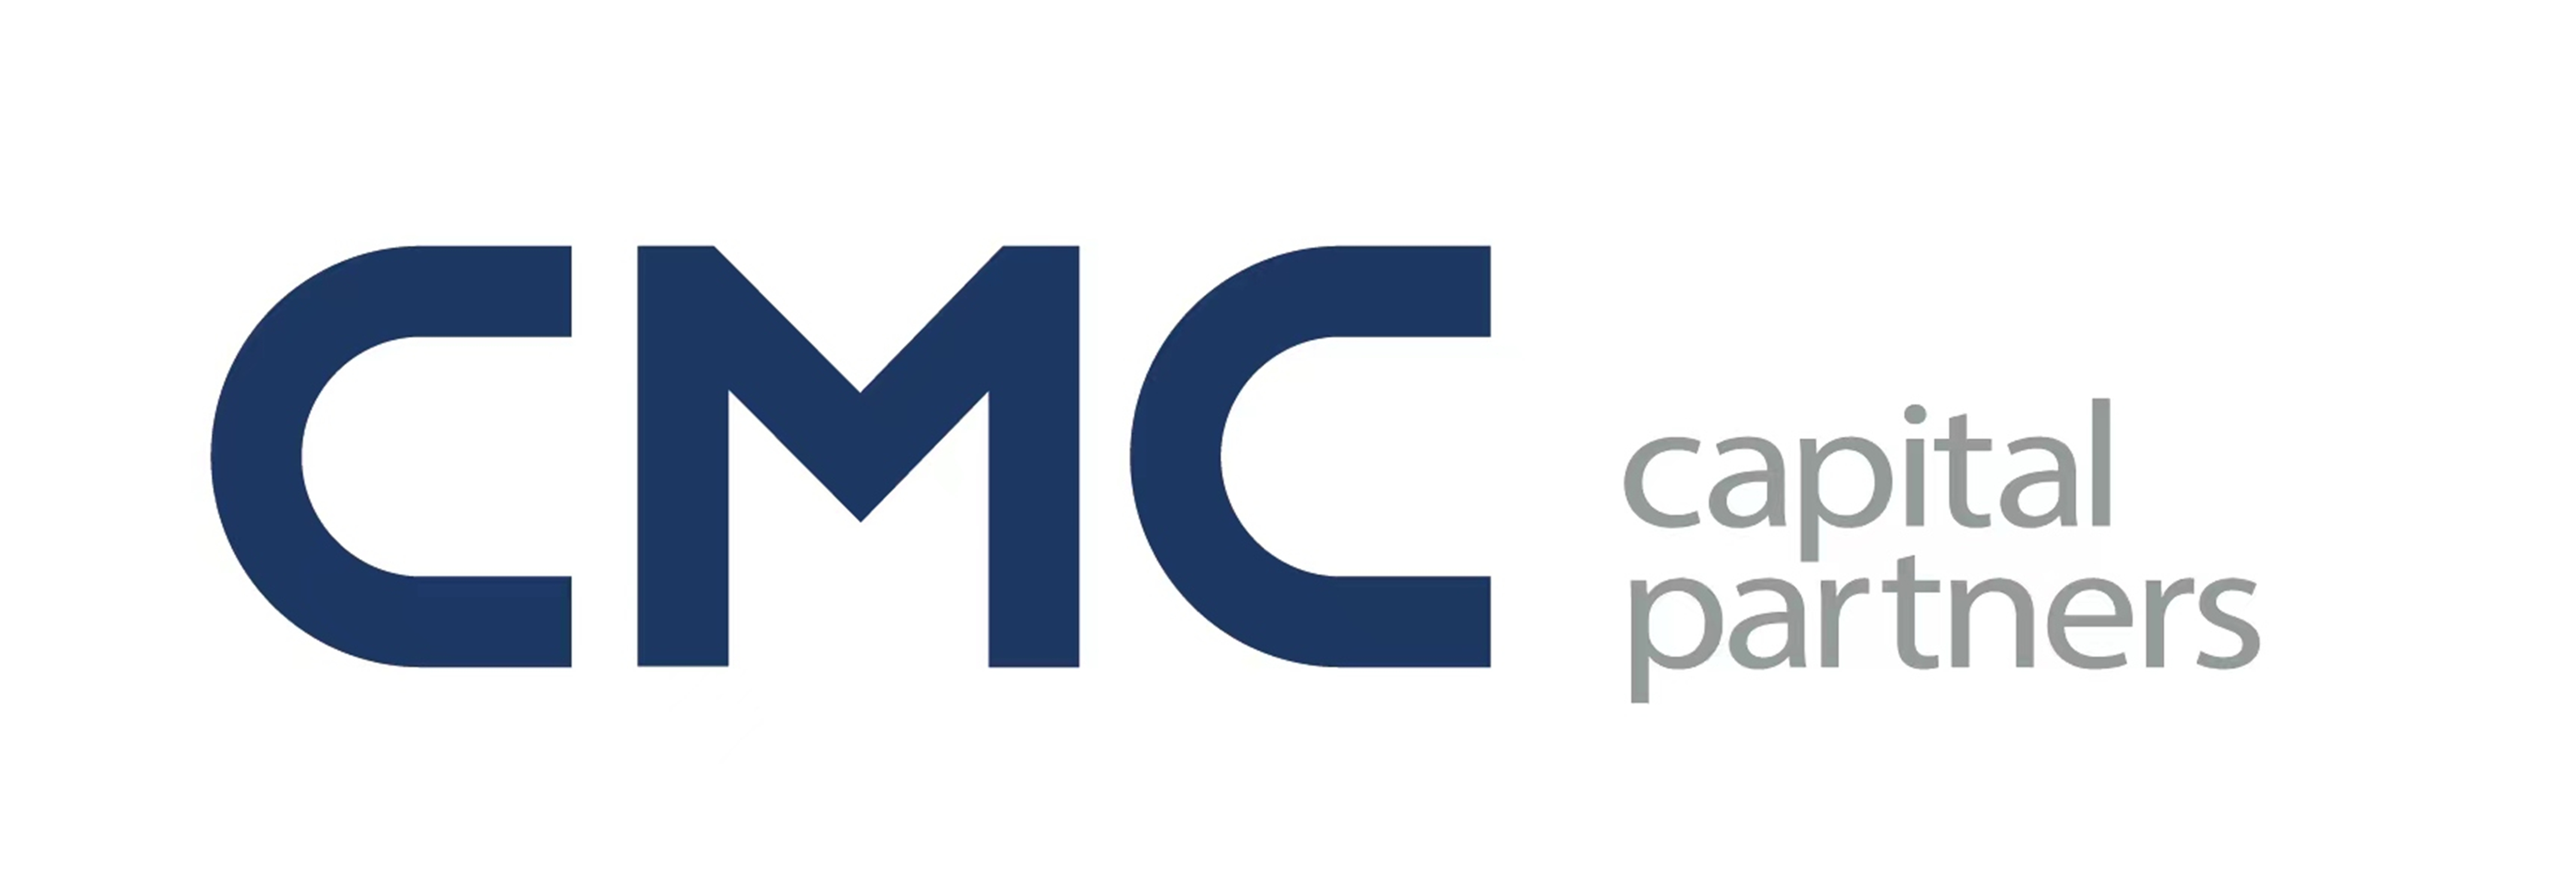  CMC Capital